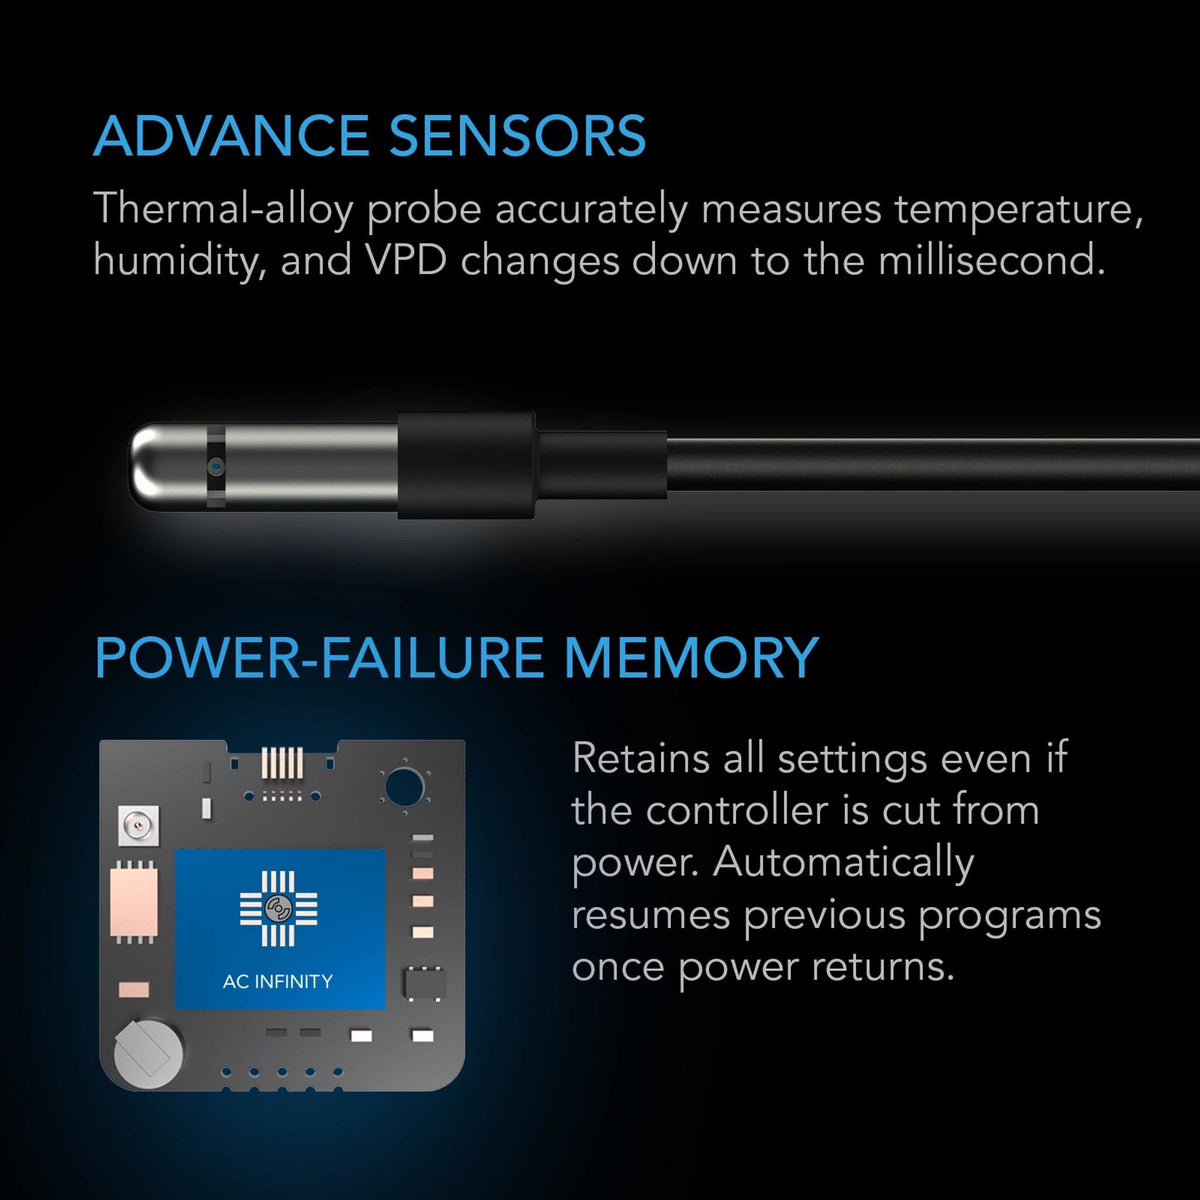 Advanced sensors and memory power failure